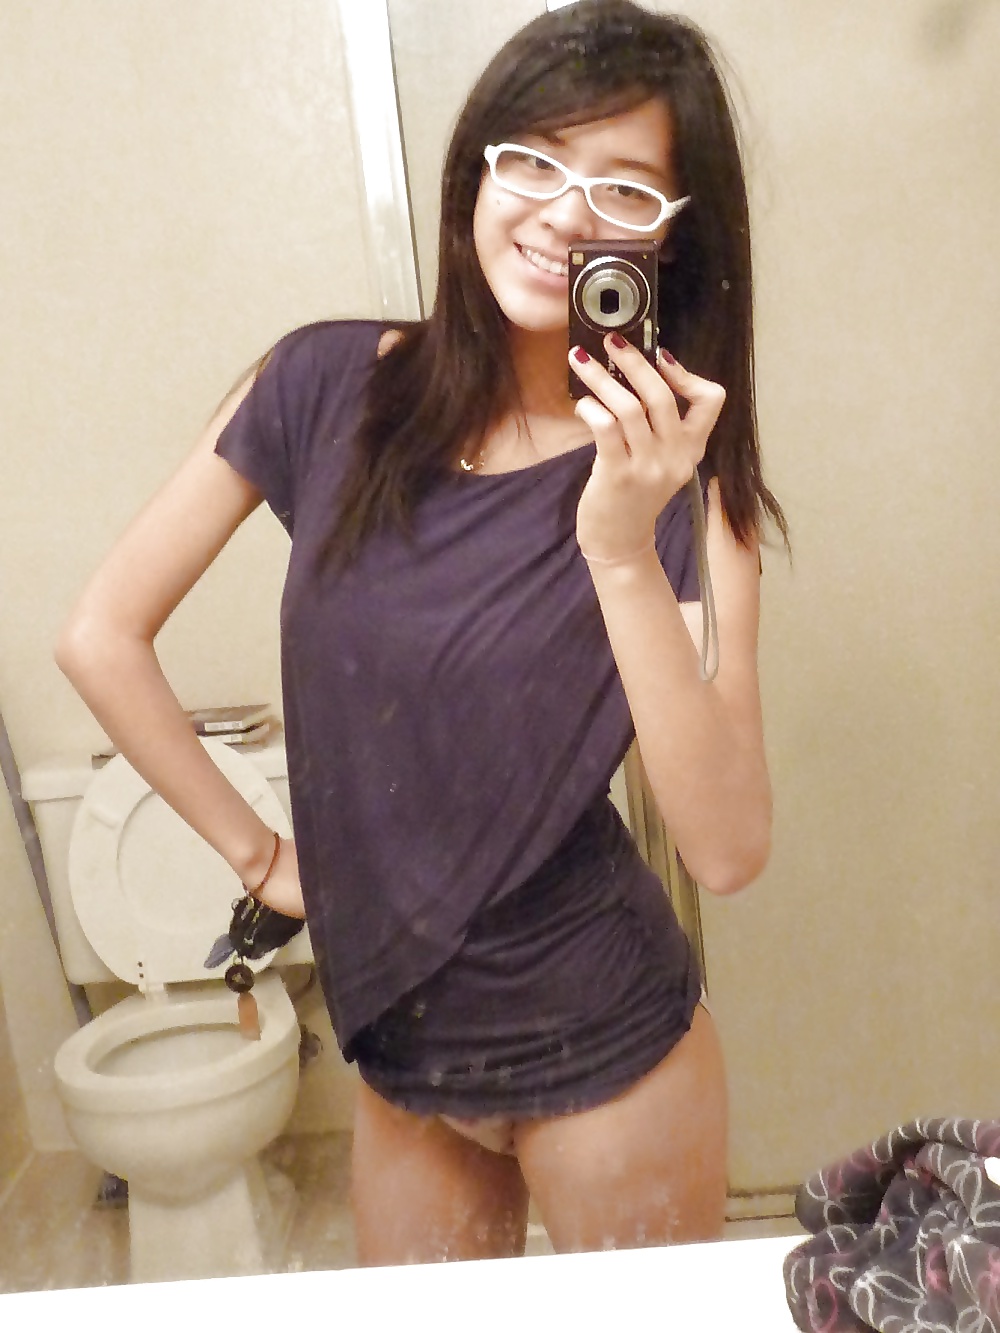 Thai Porn Glasses - Glasses Asian Girl Nude - Pics SEX